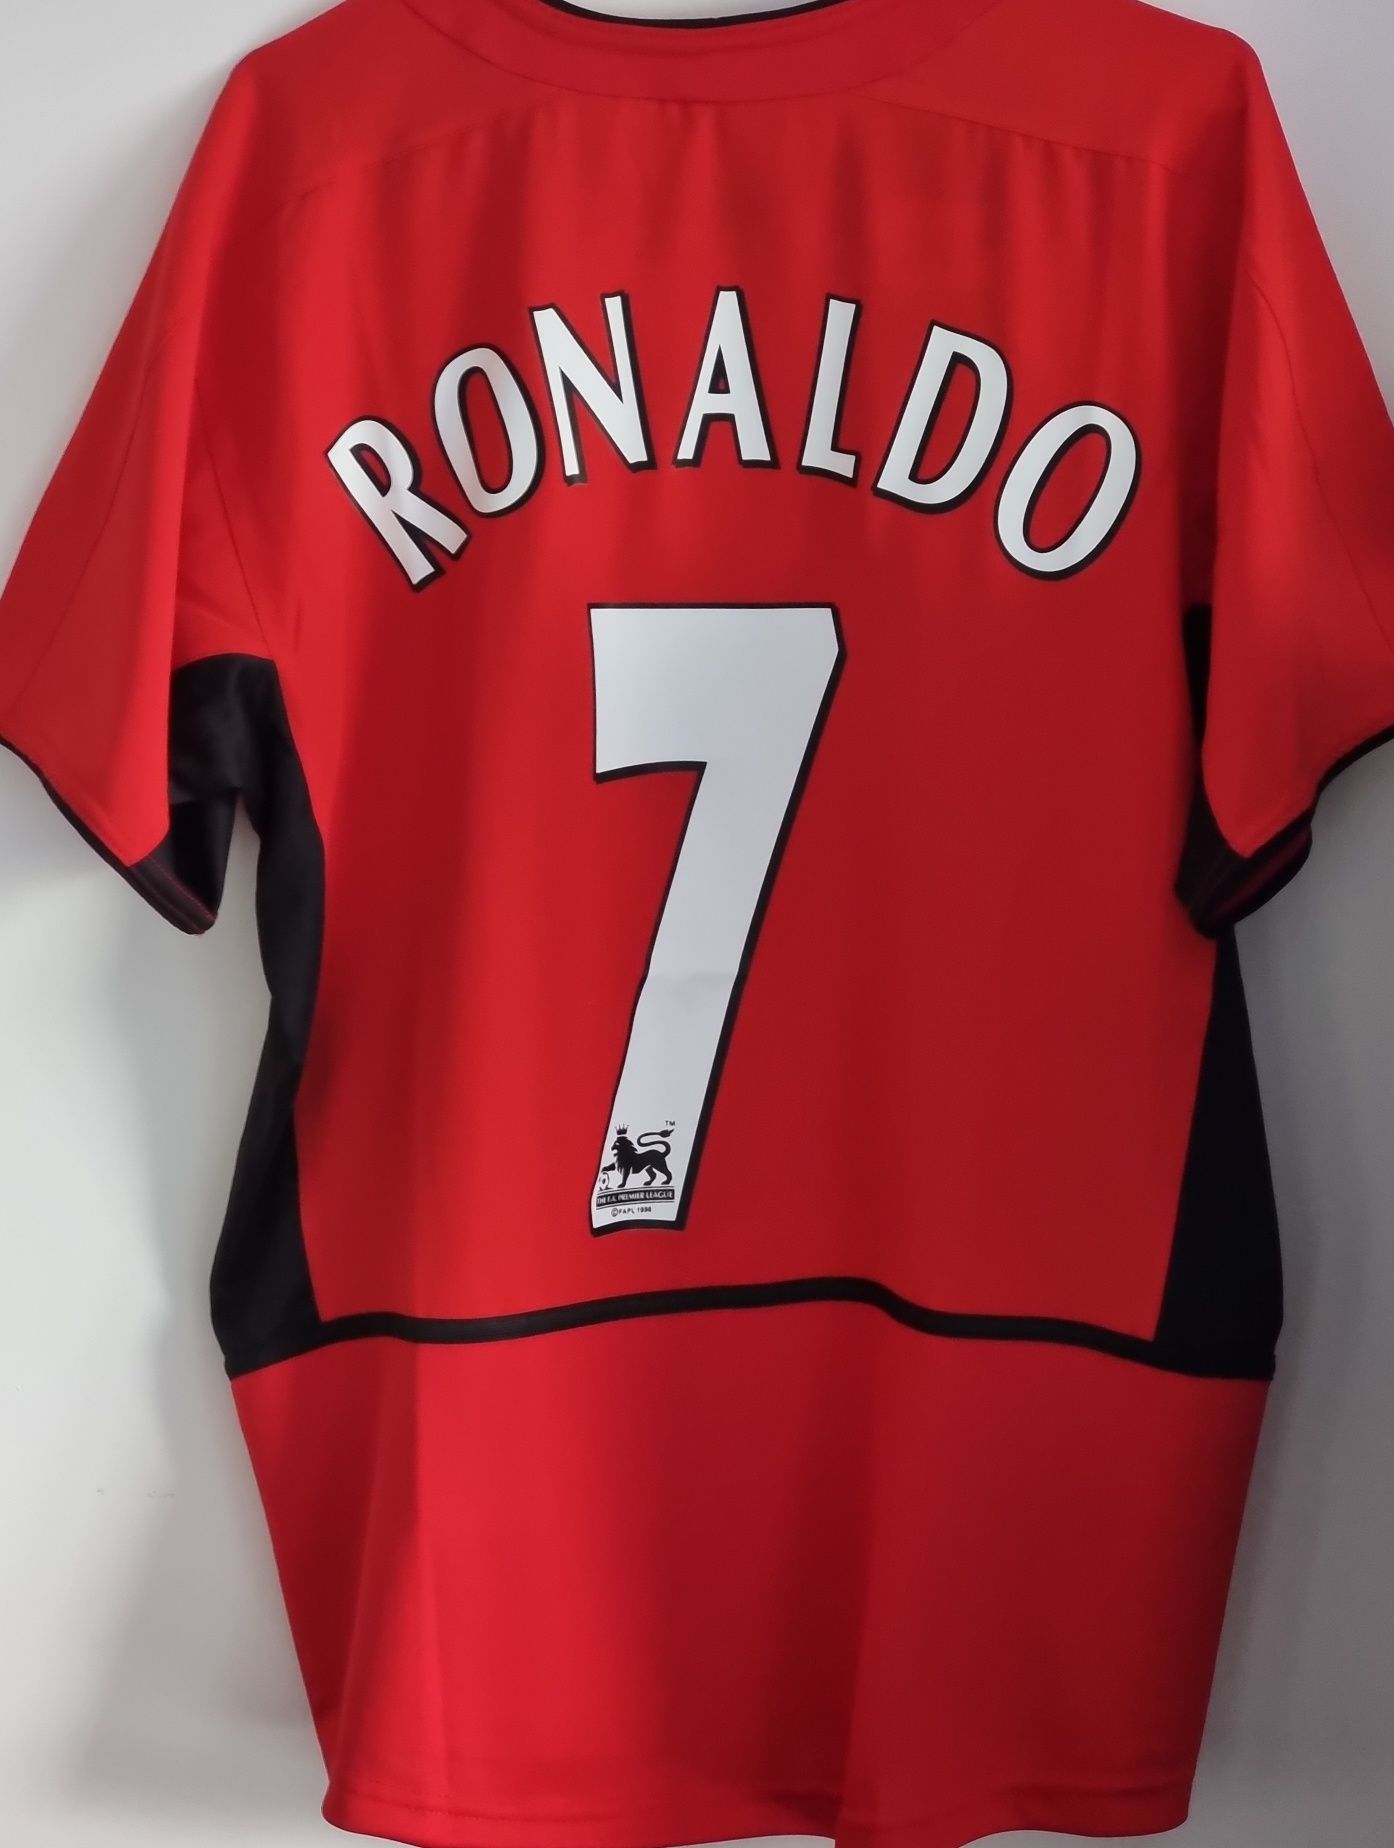 Camisola Manchester United Ronaldo 7 L 2003